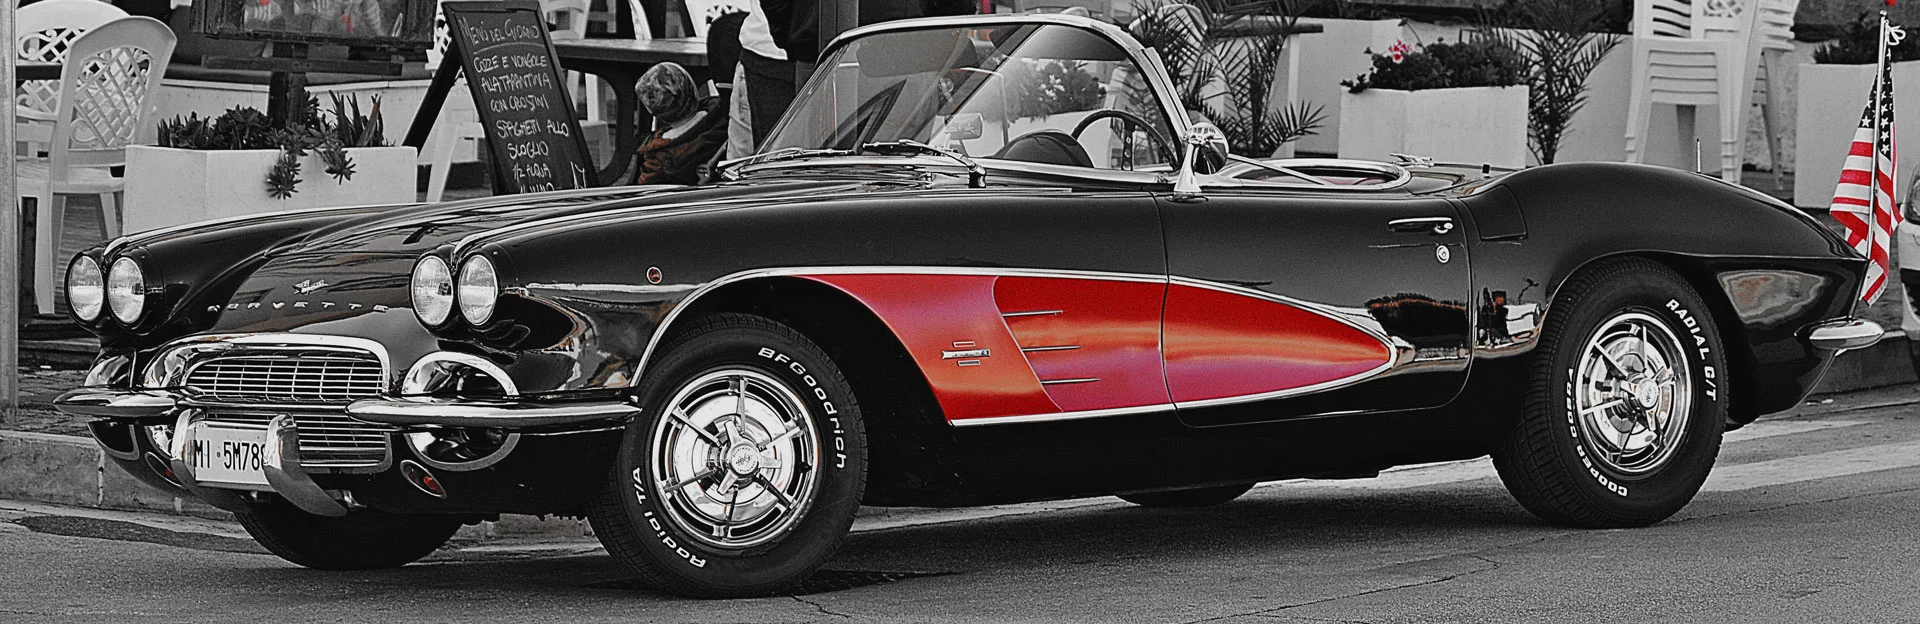 Corvette Historical Car Club of PA